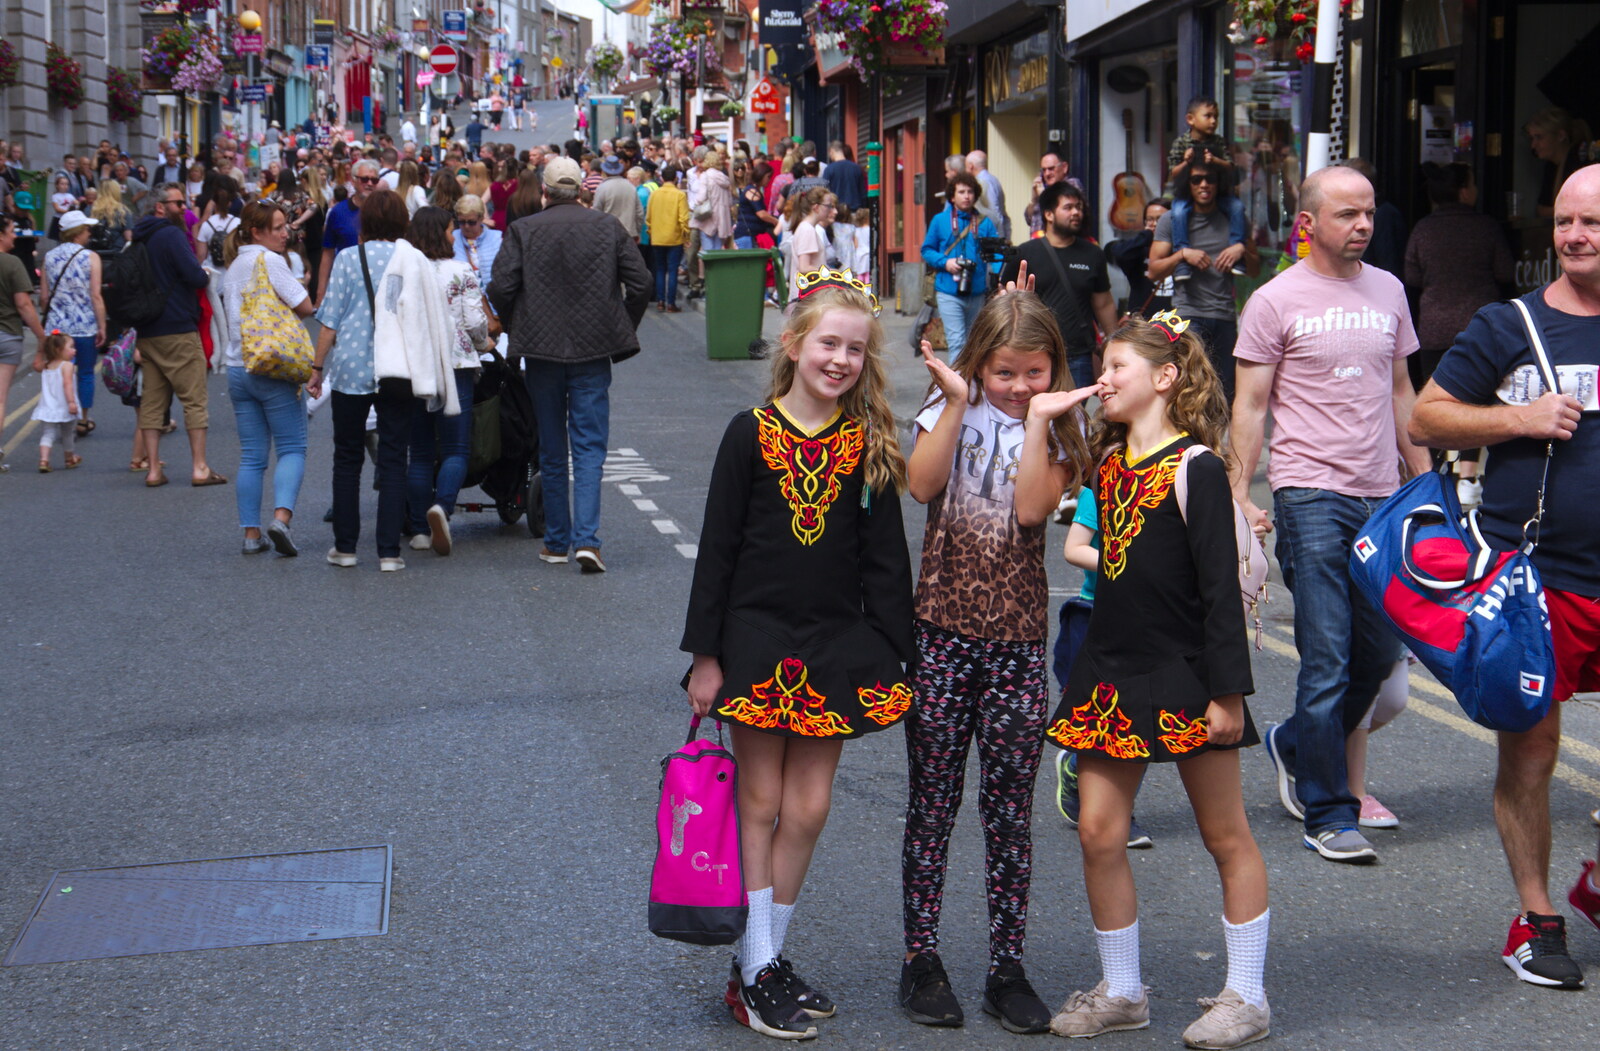 Some girls in traditional dress pose for a photo from The Fleadh Cheoil na hÉireann, Droichead Átha, Co. Louth, Ireland - 13th August 2019